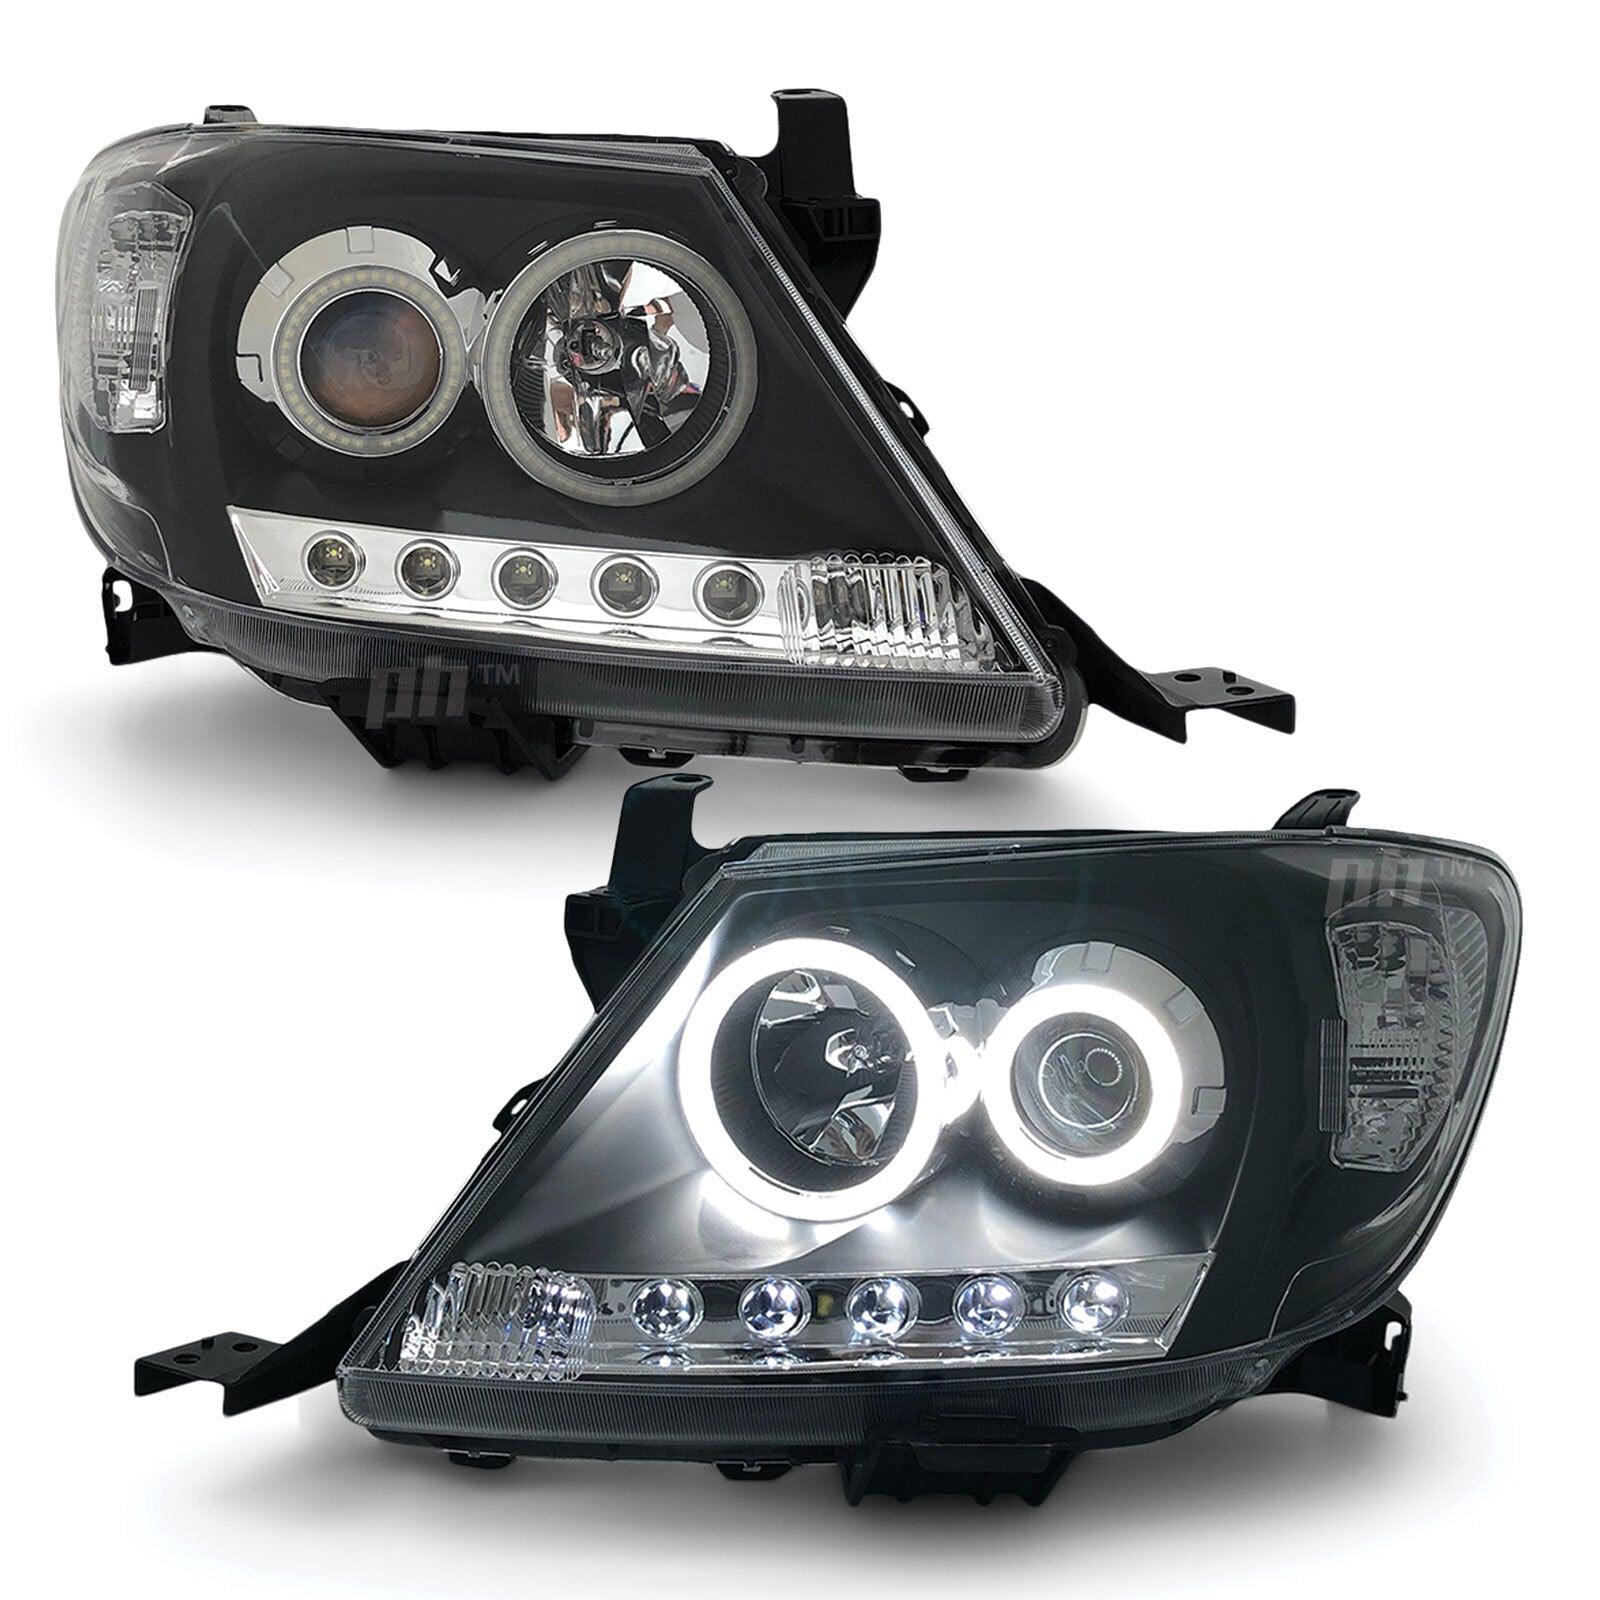 Headlights Black DRL Projector HALO Angel Eyes Fits Toyota Hilux N70 2005-04-11 - 4X4OC™